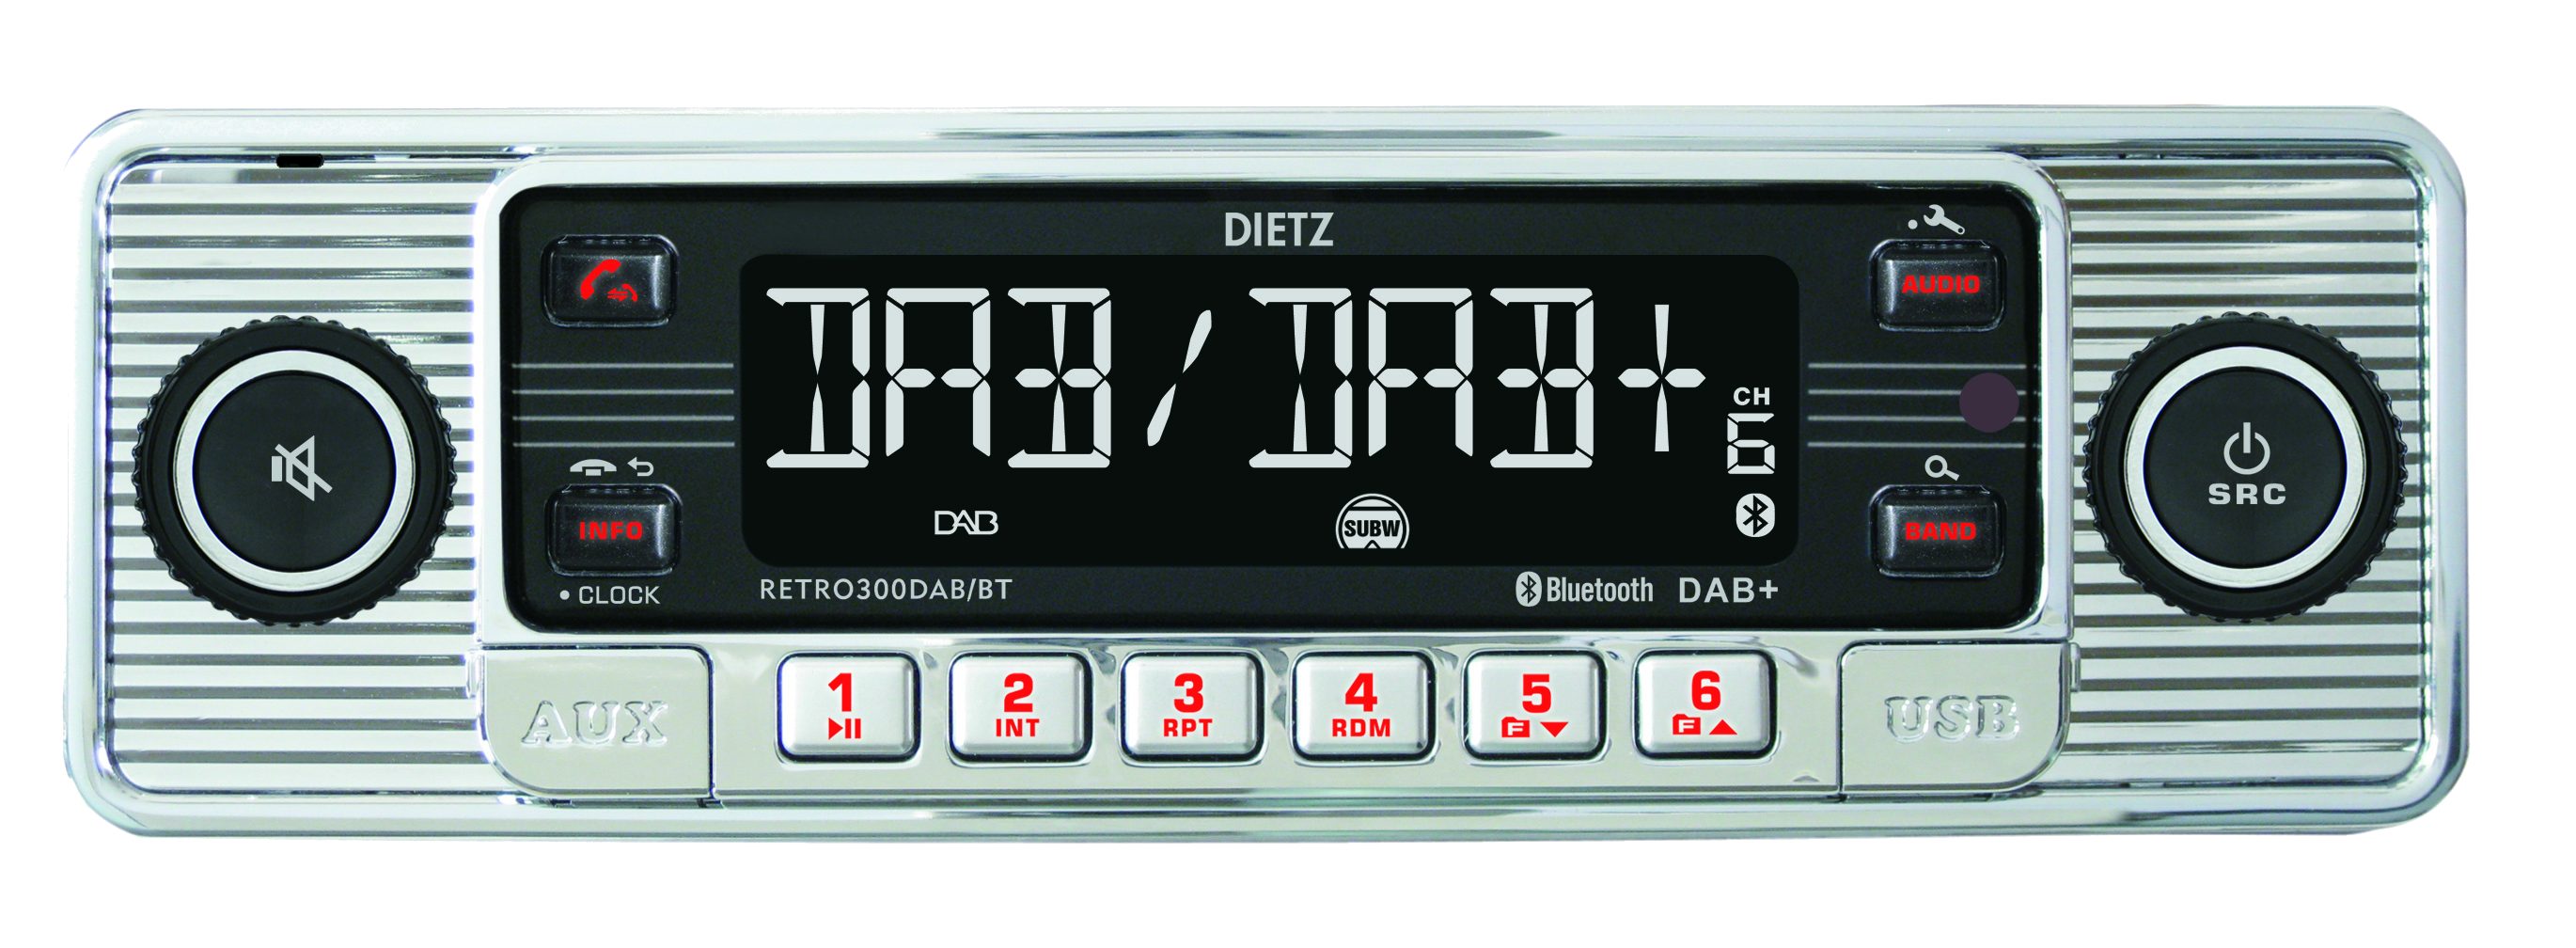 Dietz W) Silber-chrom 20,00 DAB+, RDS 1-DIN Autoradio BT, (Digitalradio FM/UKW, USB, Radio MP3, Retro (DAB), Dietz